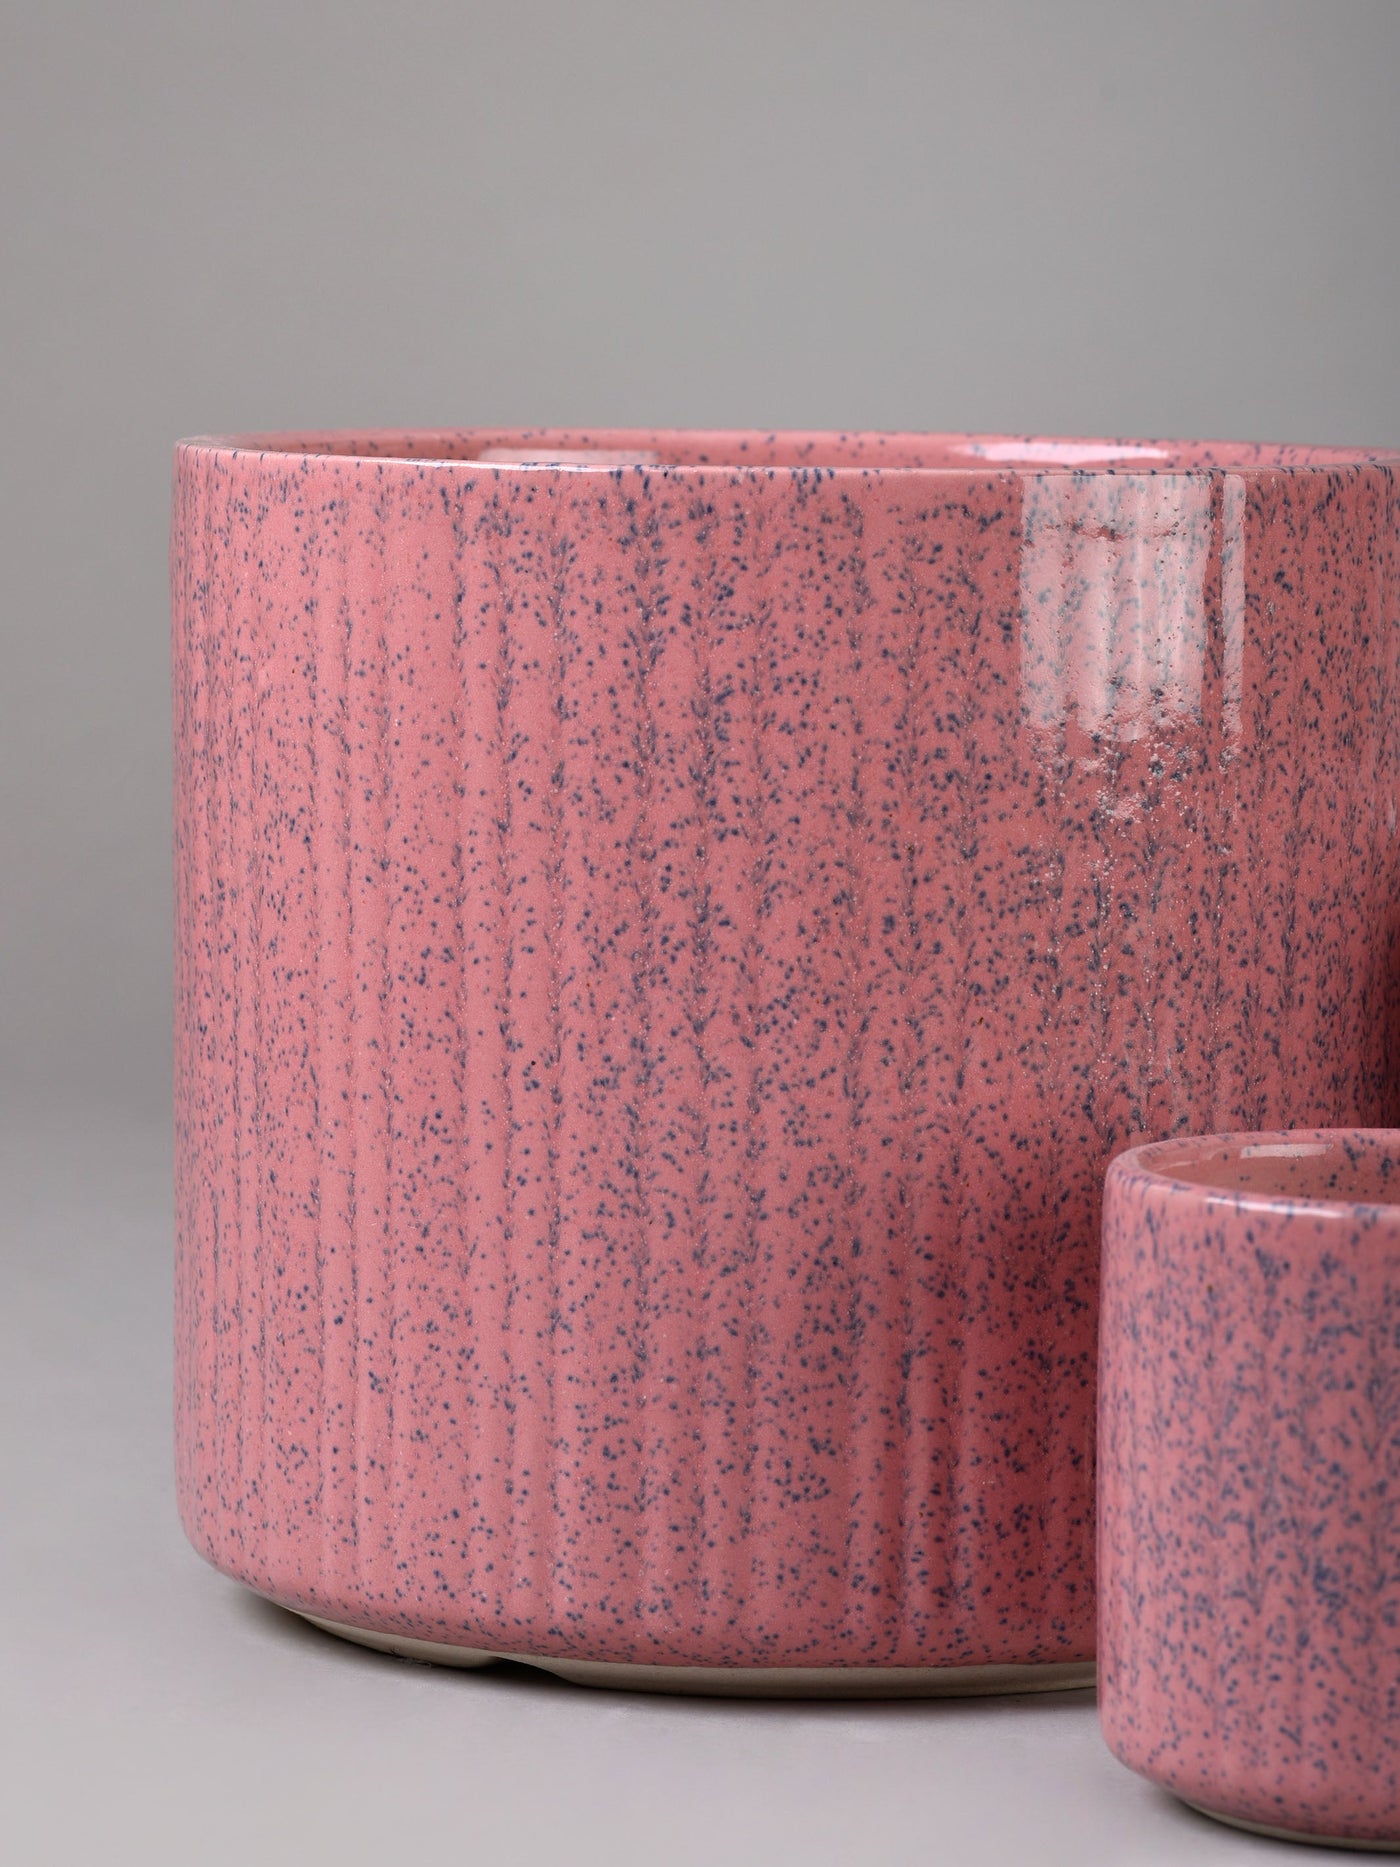 Ridged & Speckled Ceramic Planter Set of 3